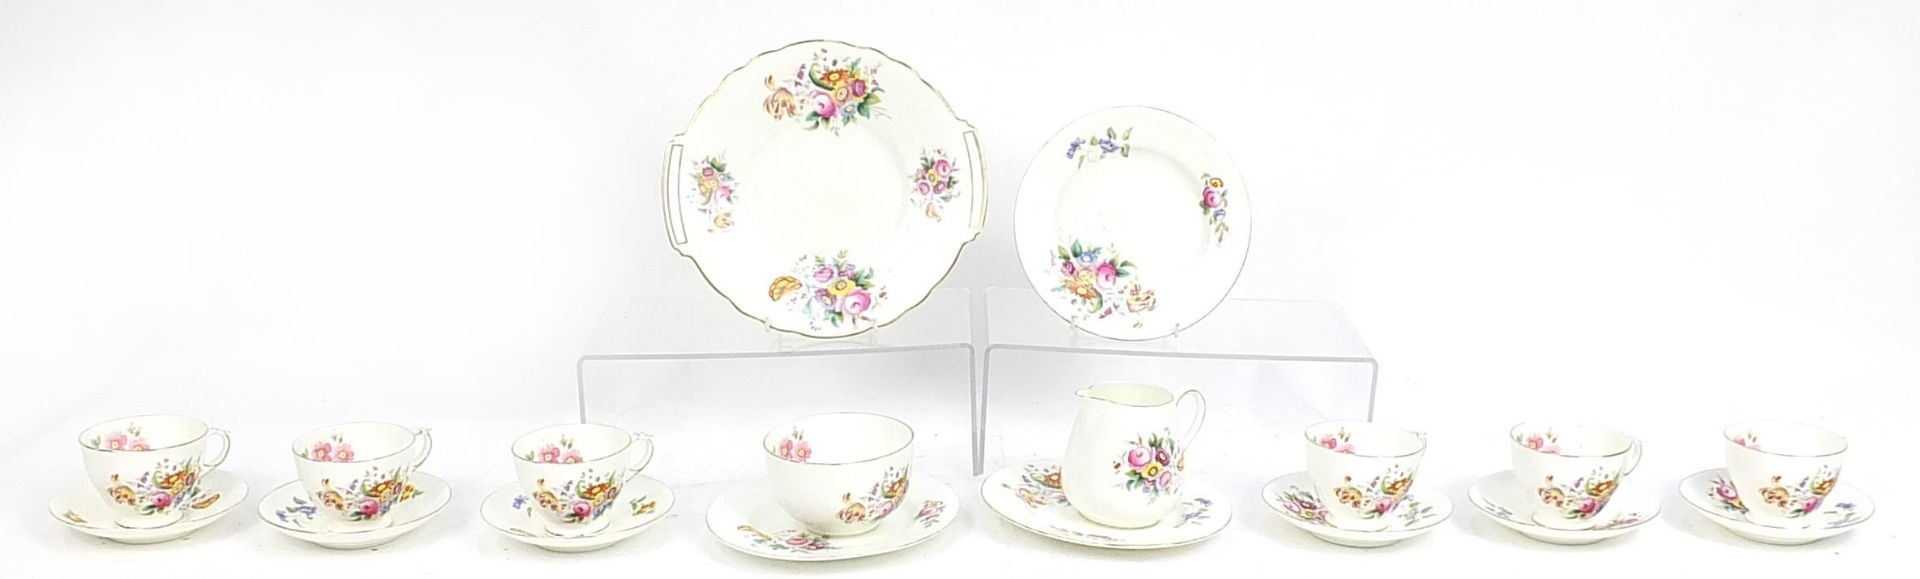 George Jones Crescent June Time floral teaware